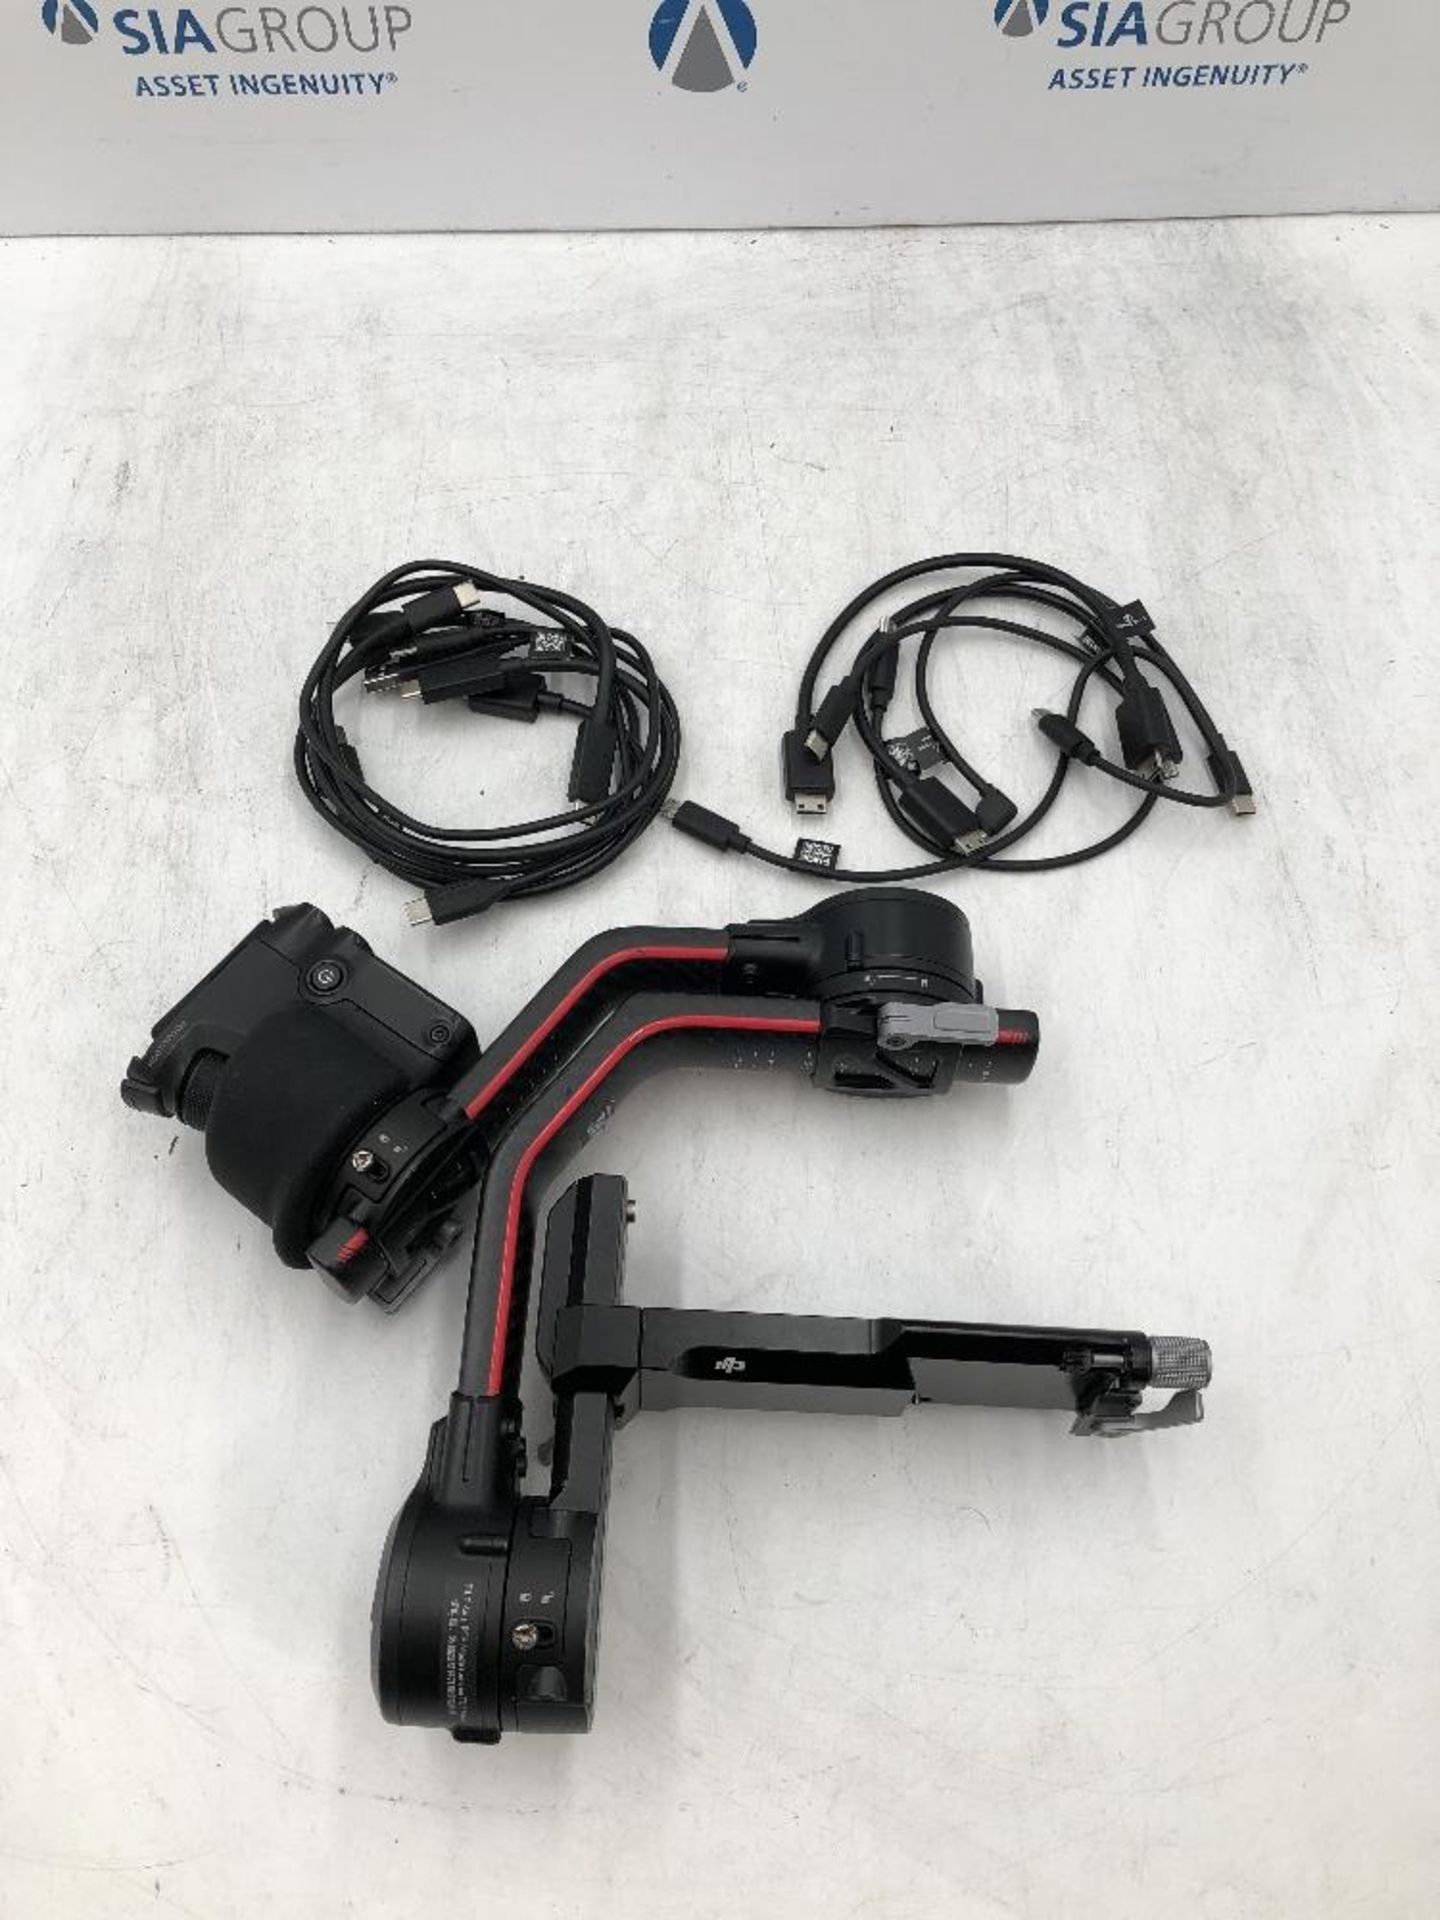 DJI RS 2 Gimbal 3-axis camera Stabiliser Kit for DSLR Cameras - Image 5 of 7